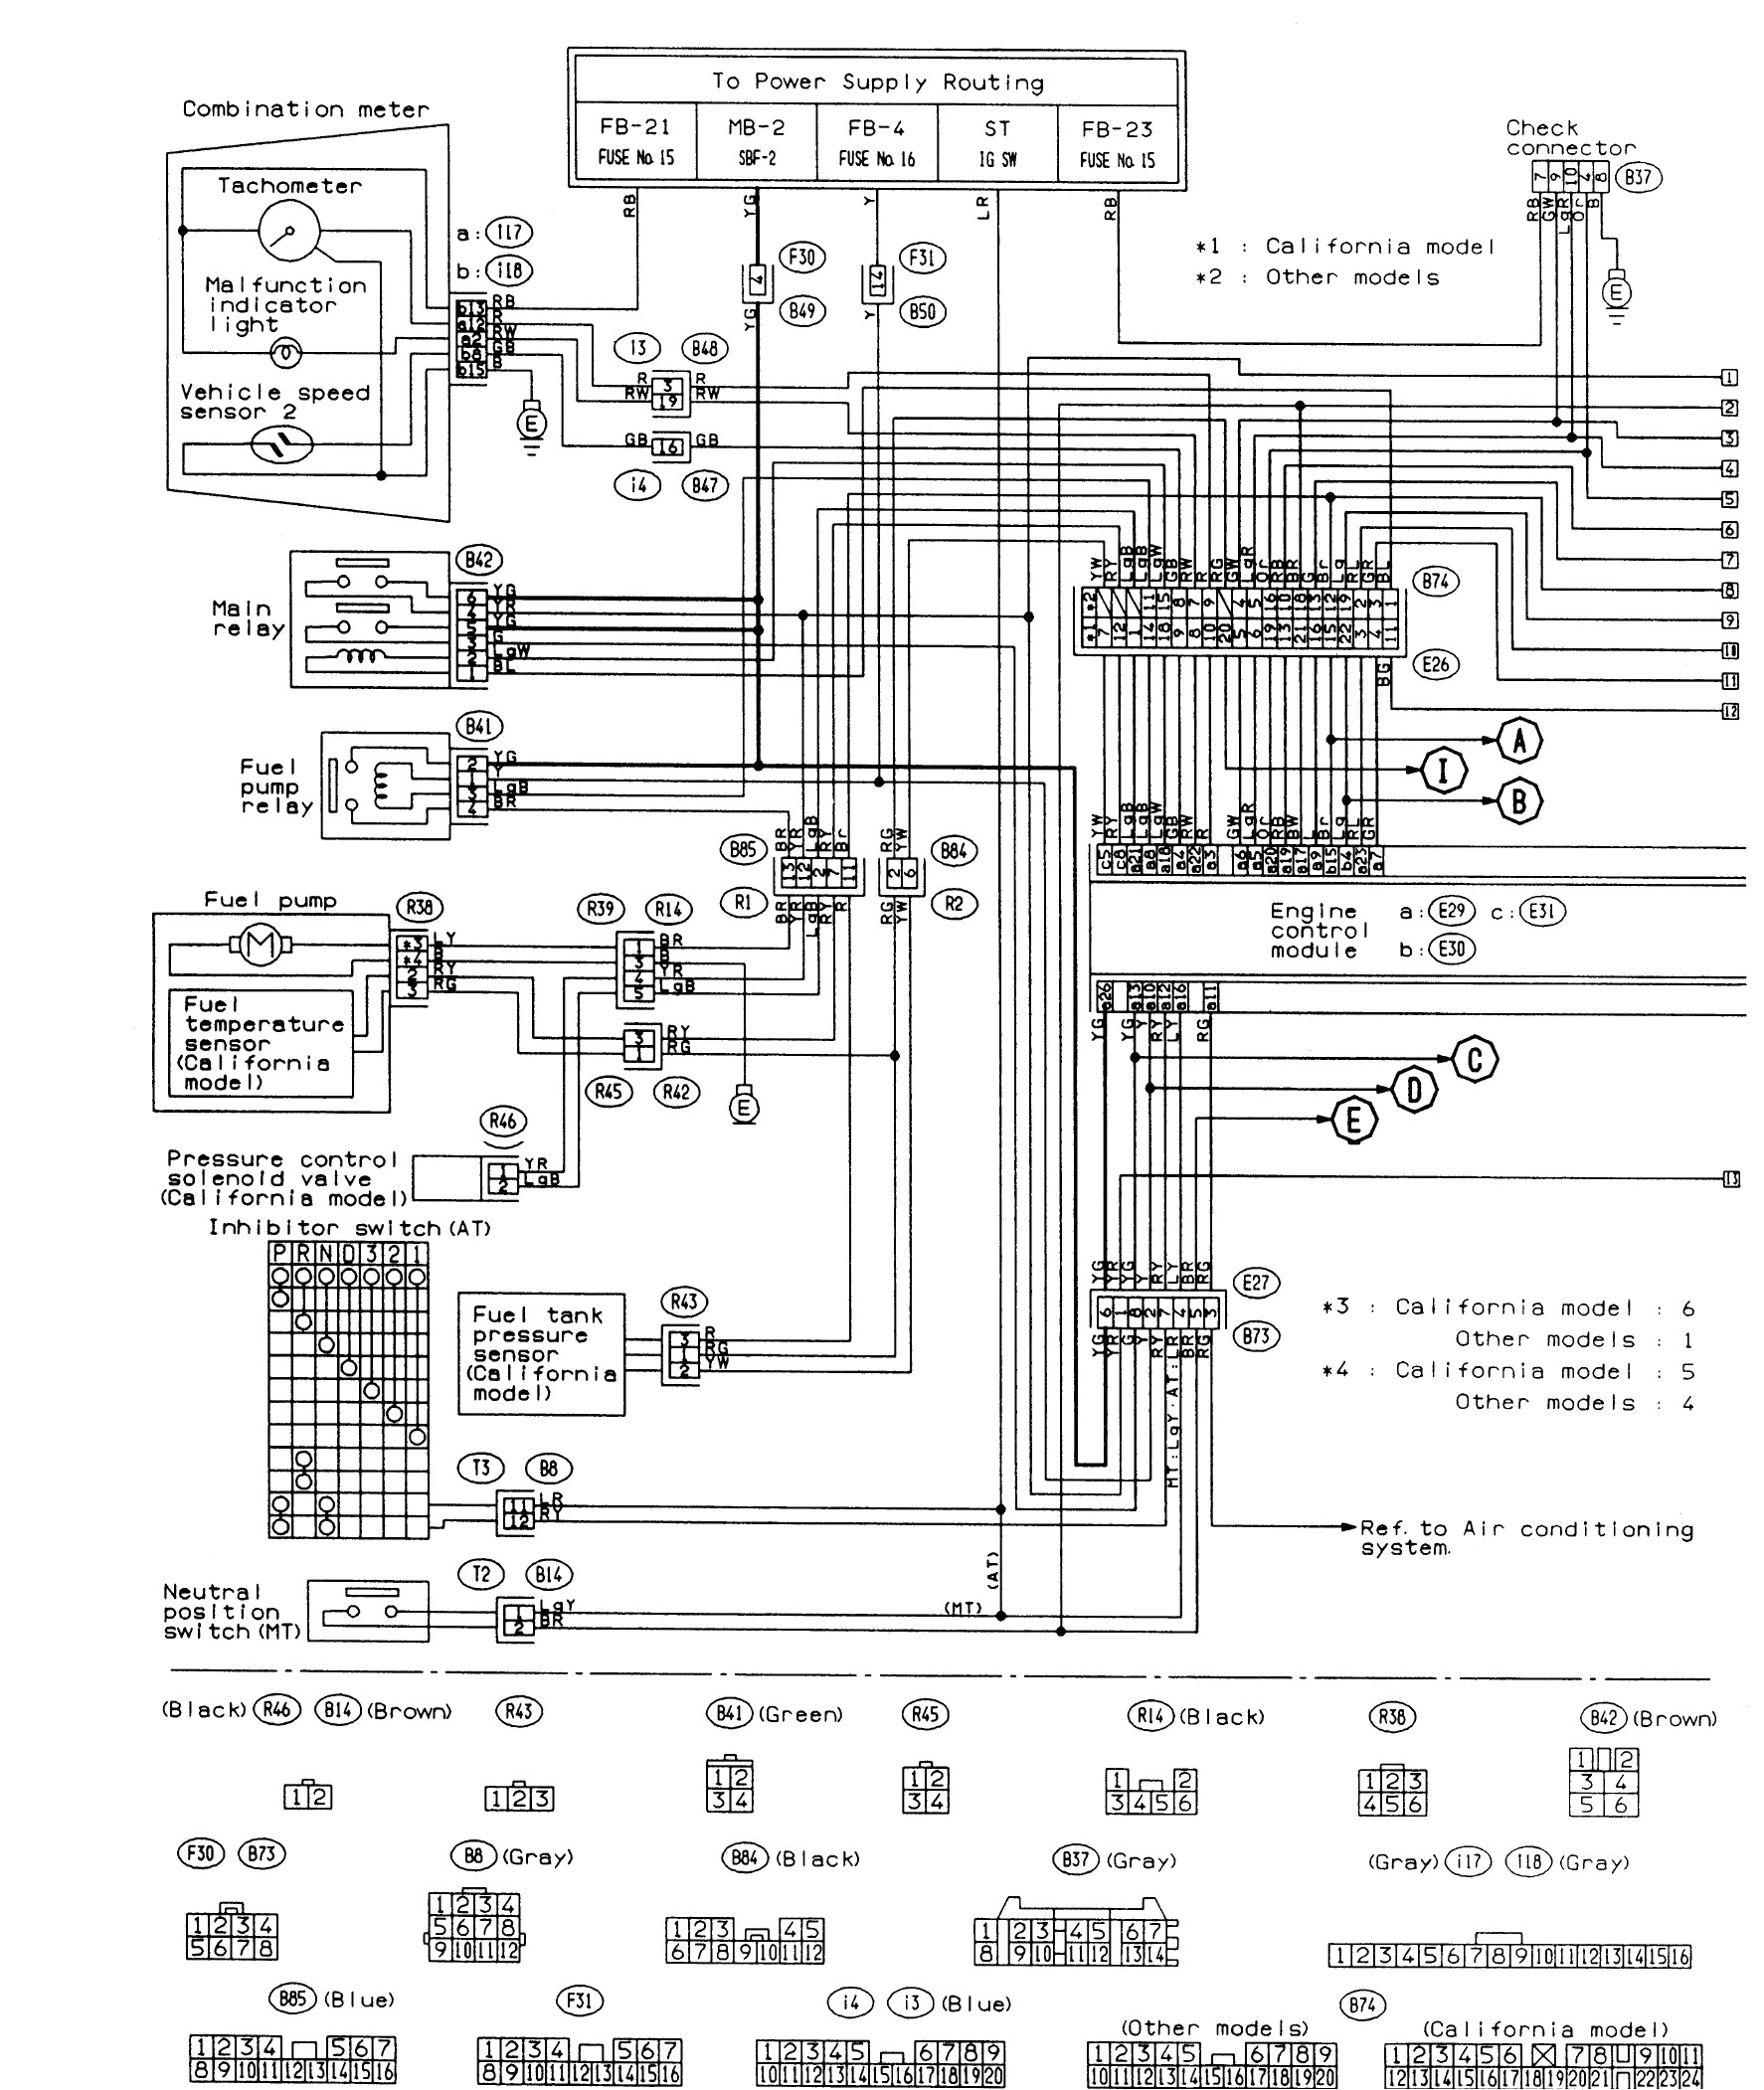 1999 subaru legacy wiring diagram simplified shapes 2015 subaru legacy stereo wiring diagram autos post wire center of 1999 subaru legacy wiring diagram jpg